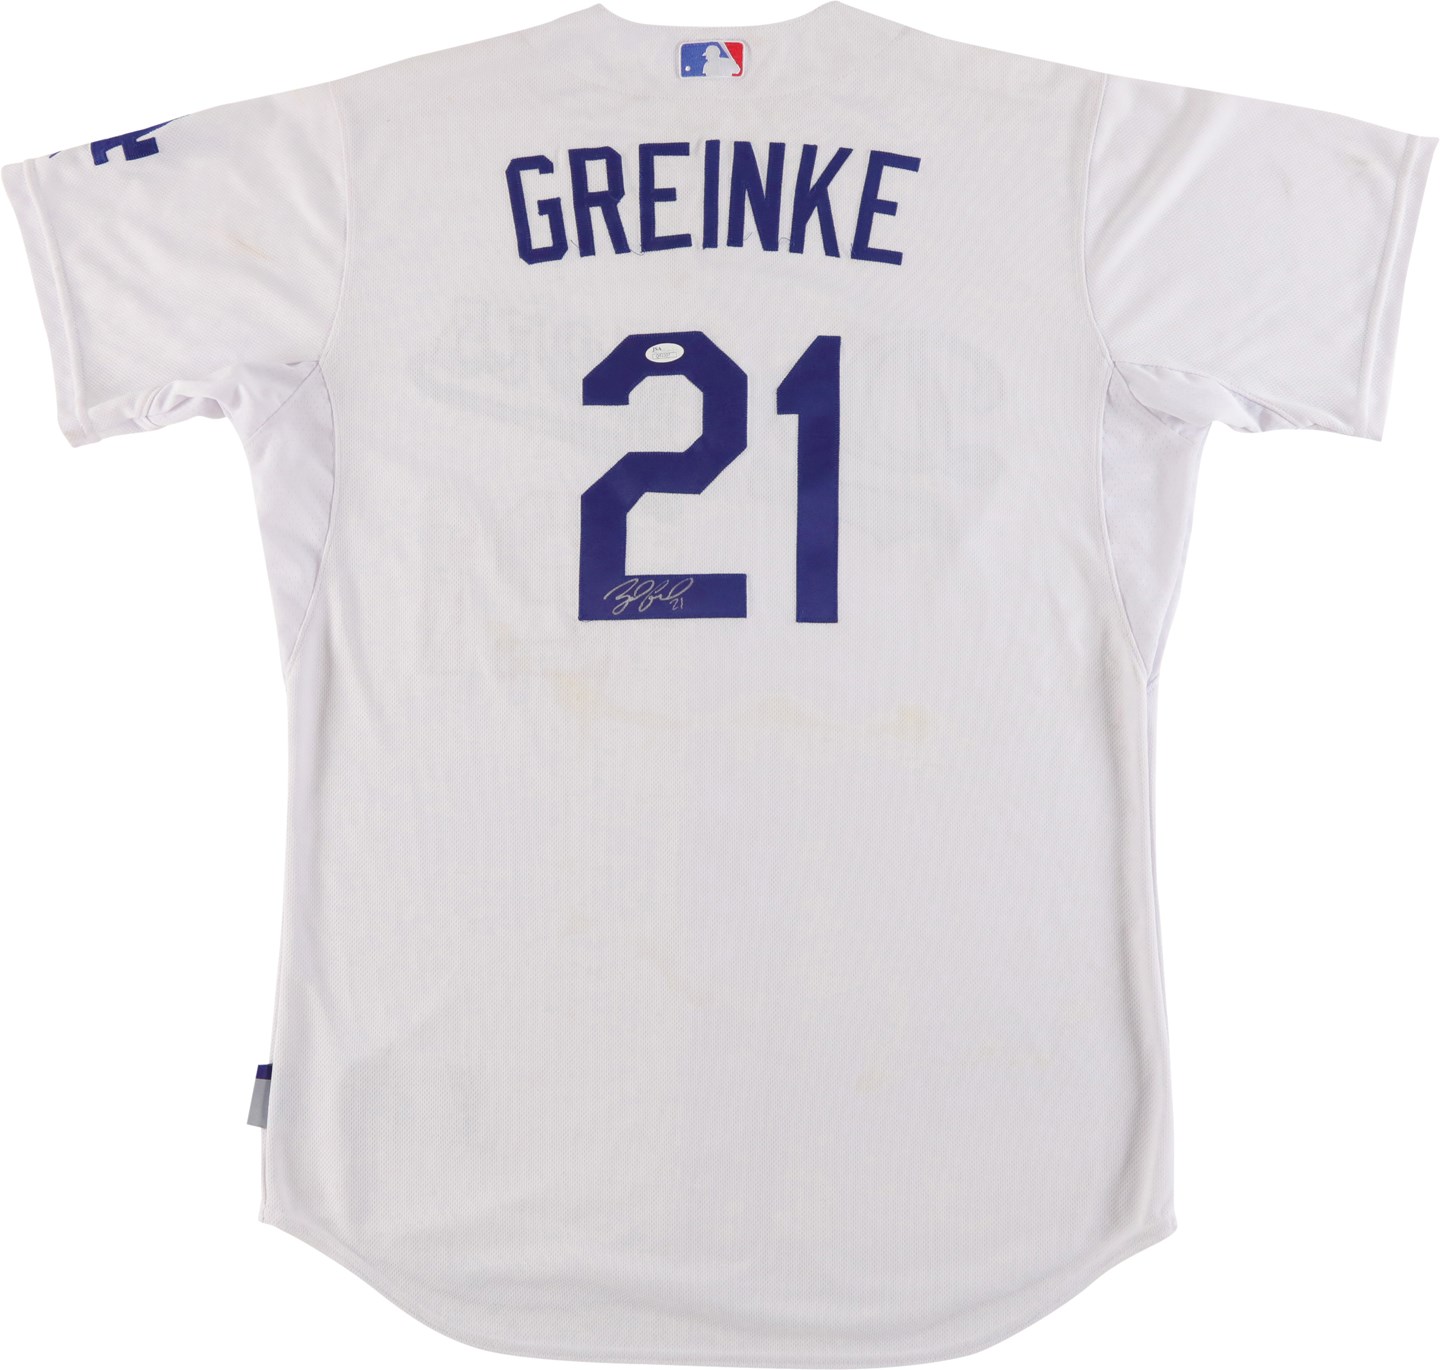 2015 Zack Greinke Los Angeles Dodgers Signed Game Worn Jersey